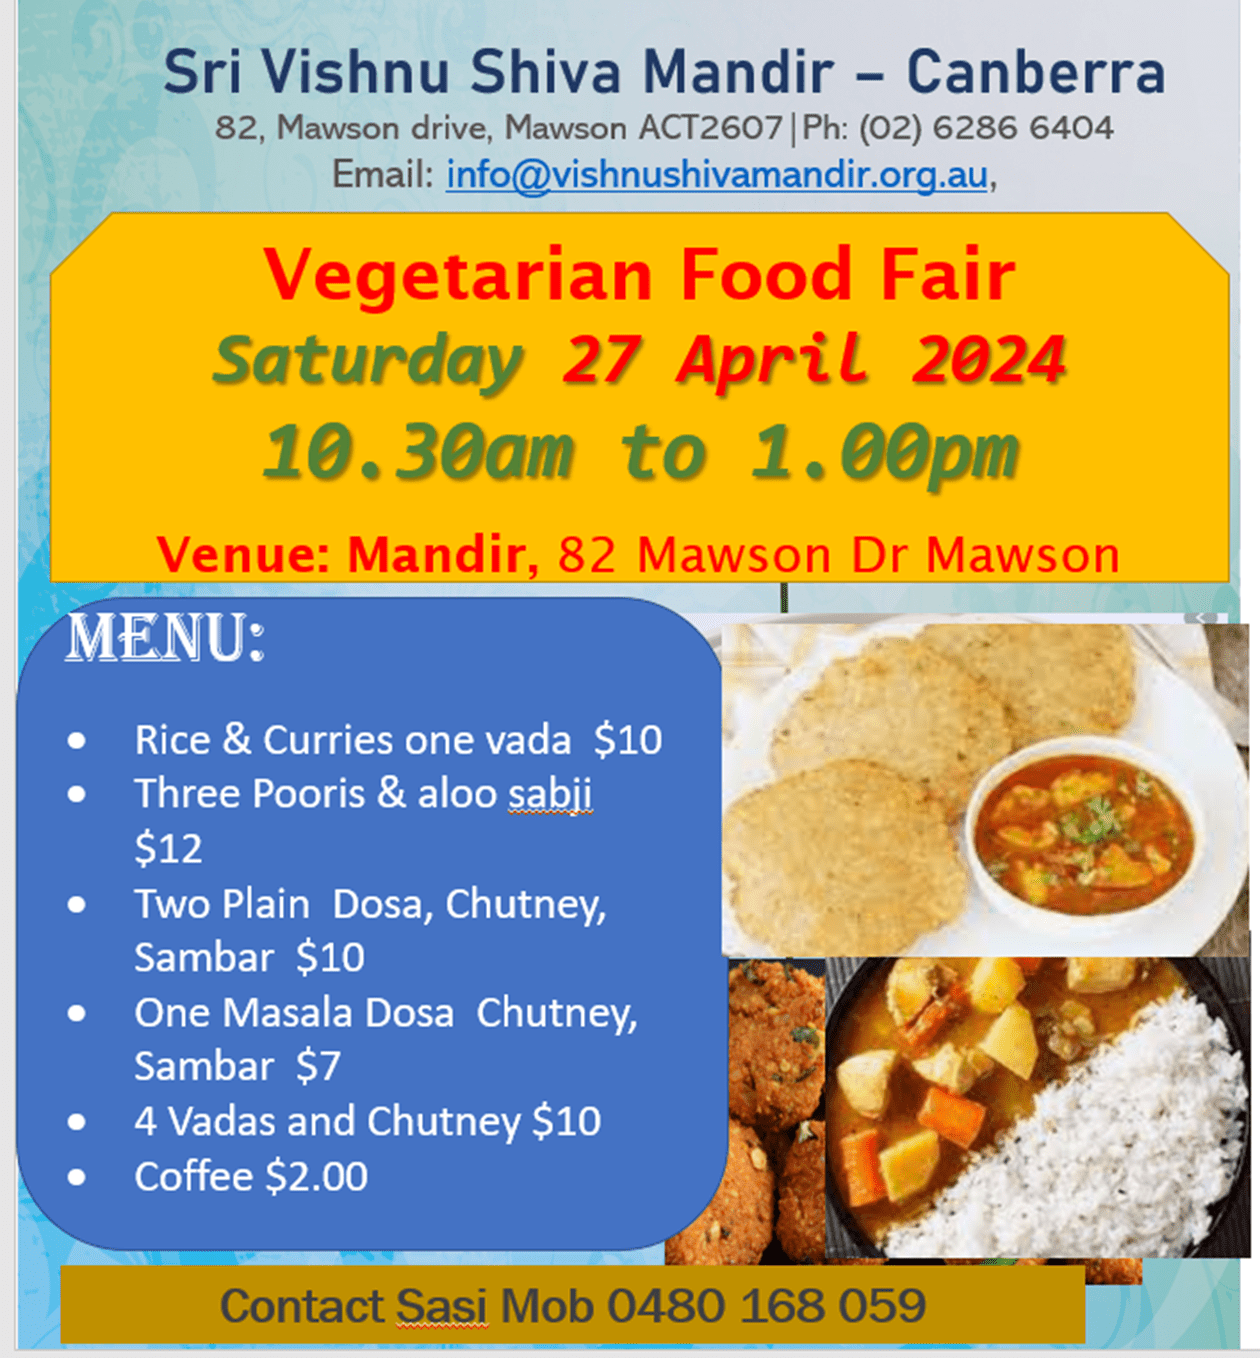 Vegetarian Food Fair on 27 Apr